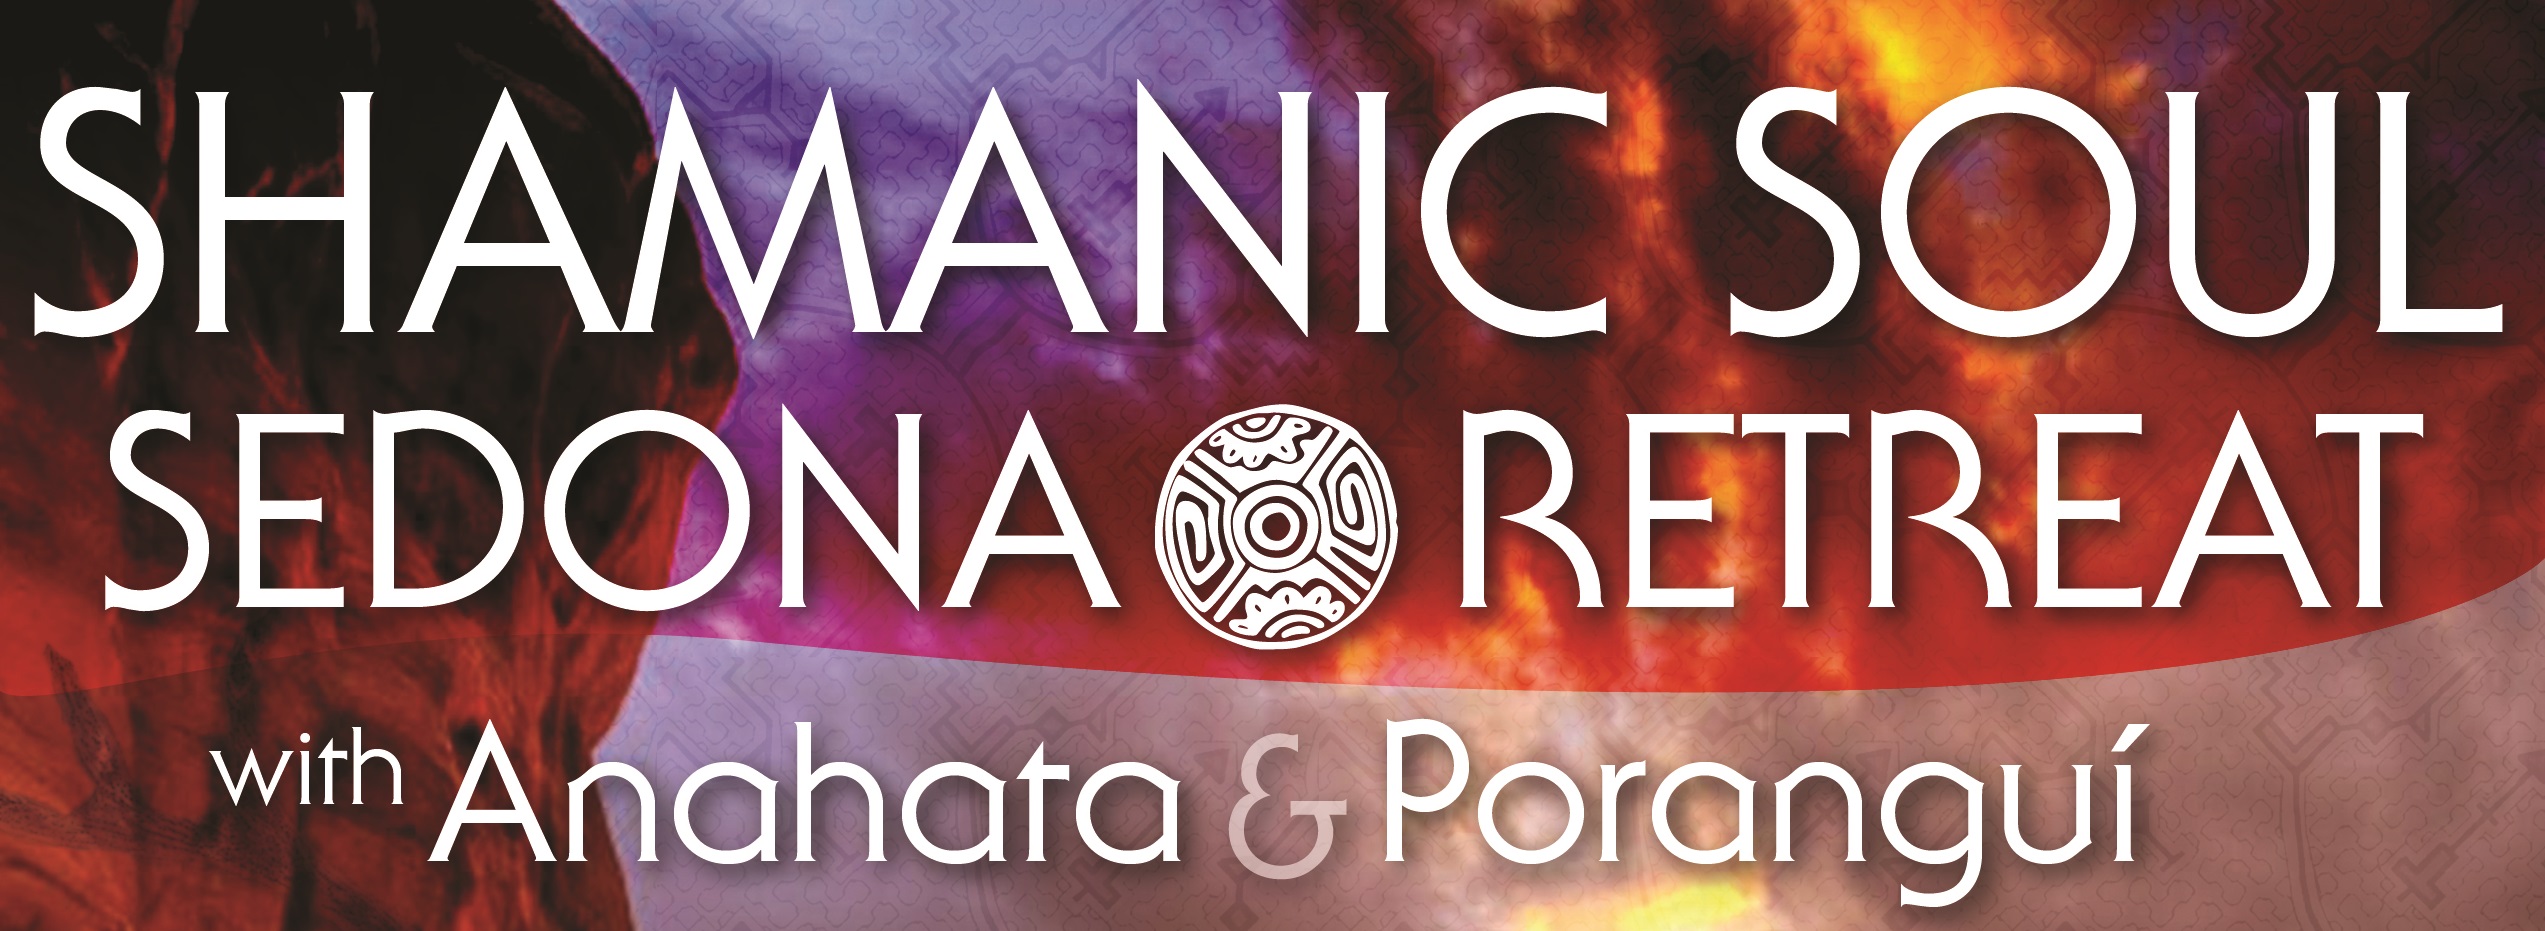 Shamanic Soul Retreat in Sedona